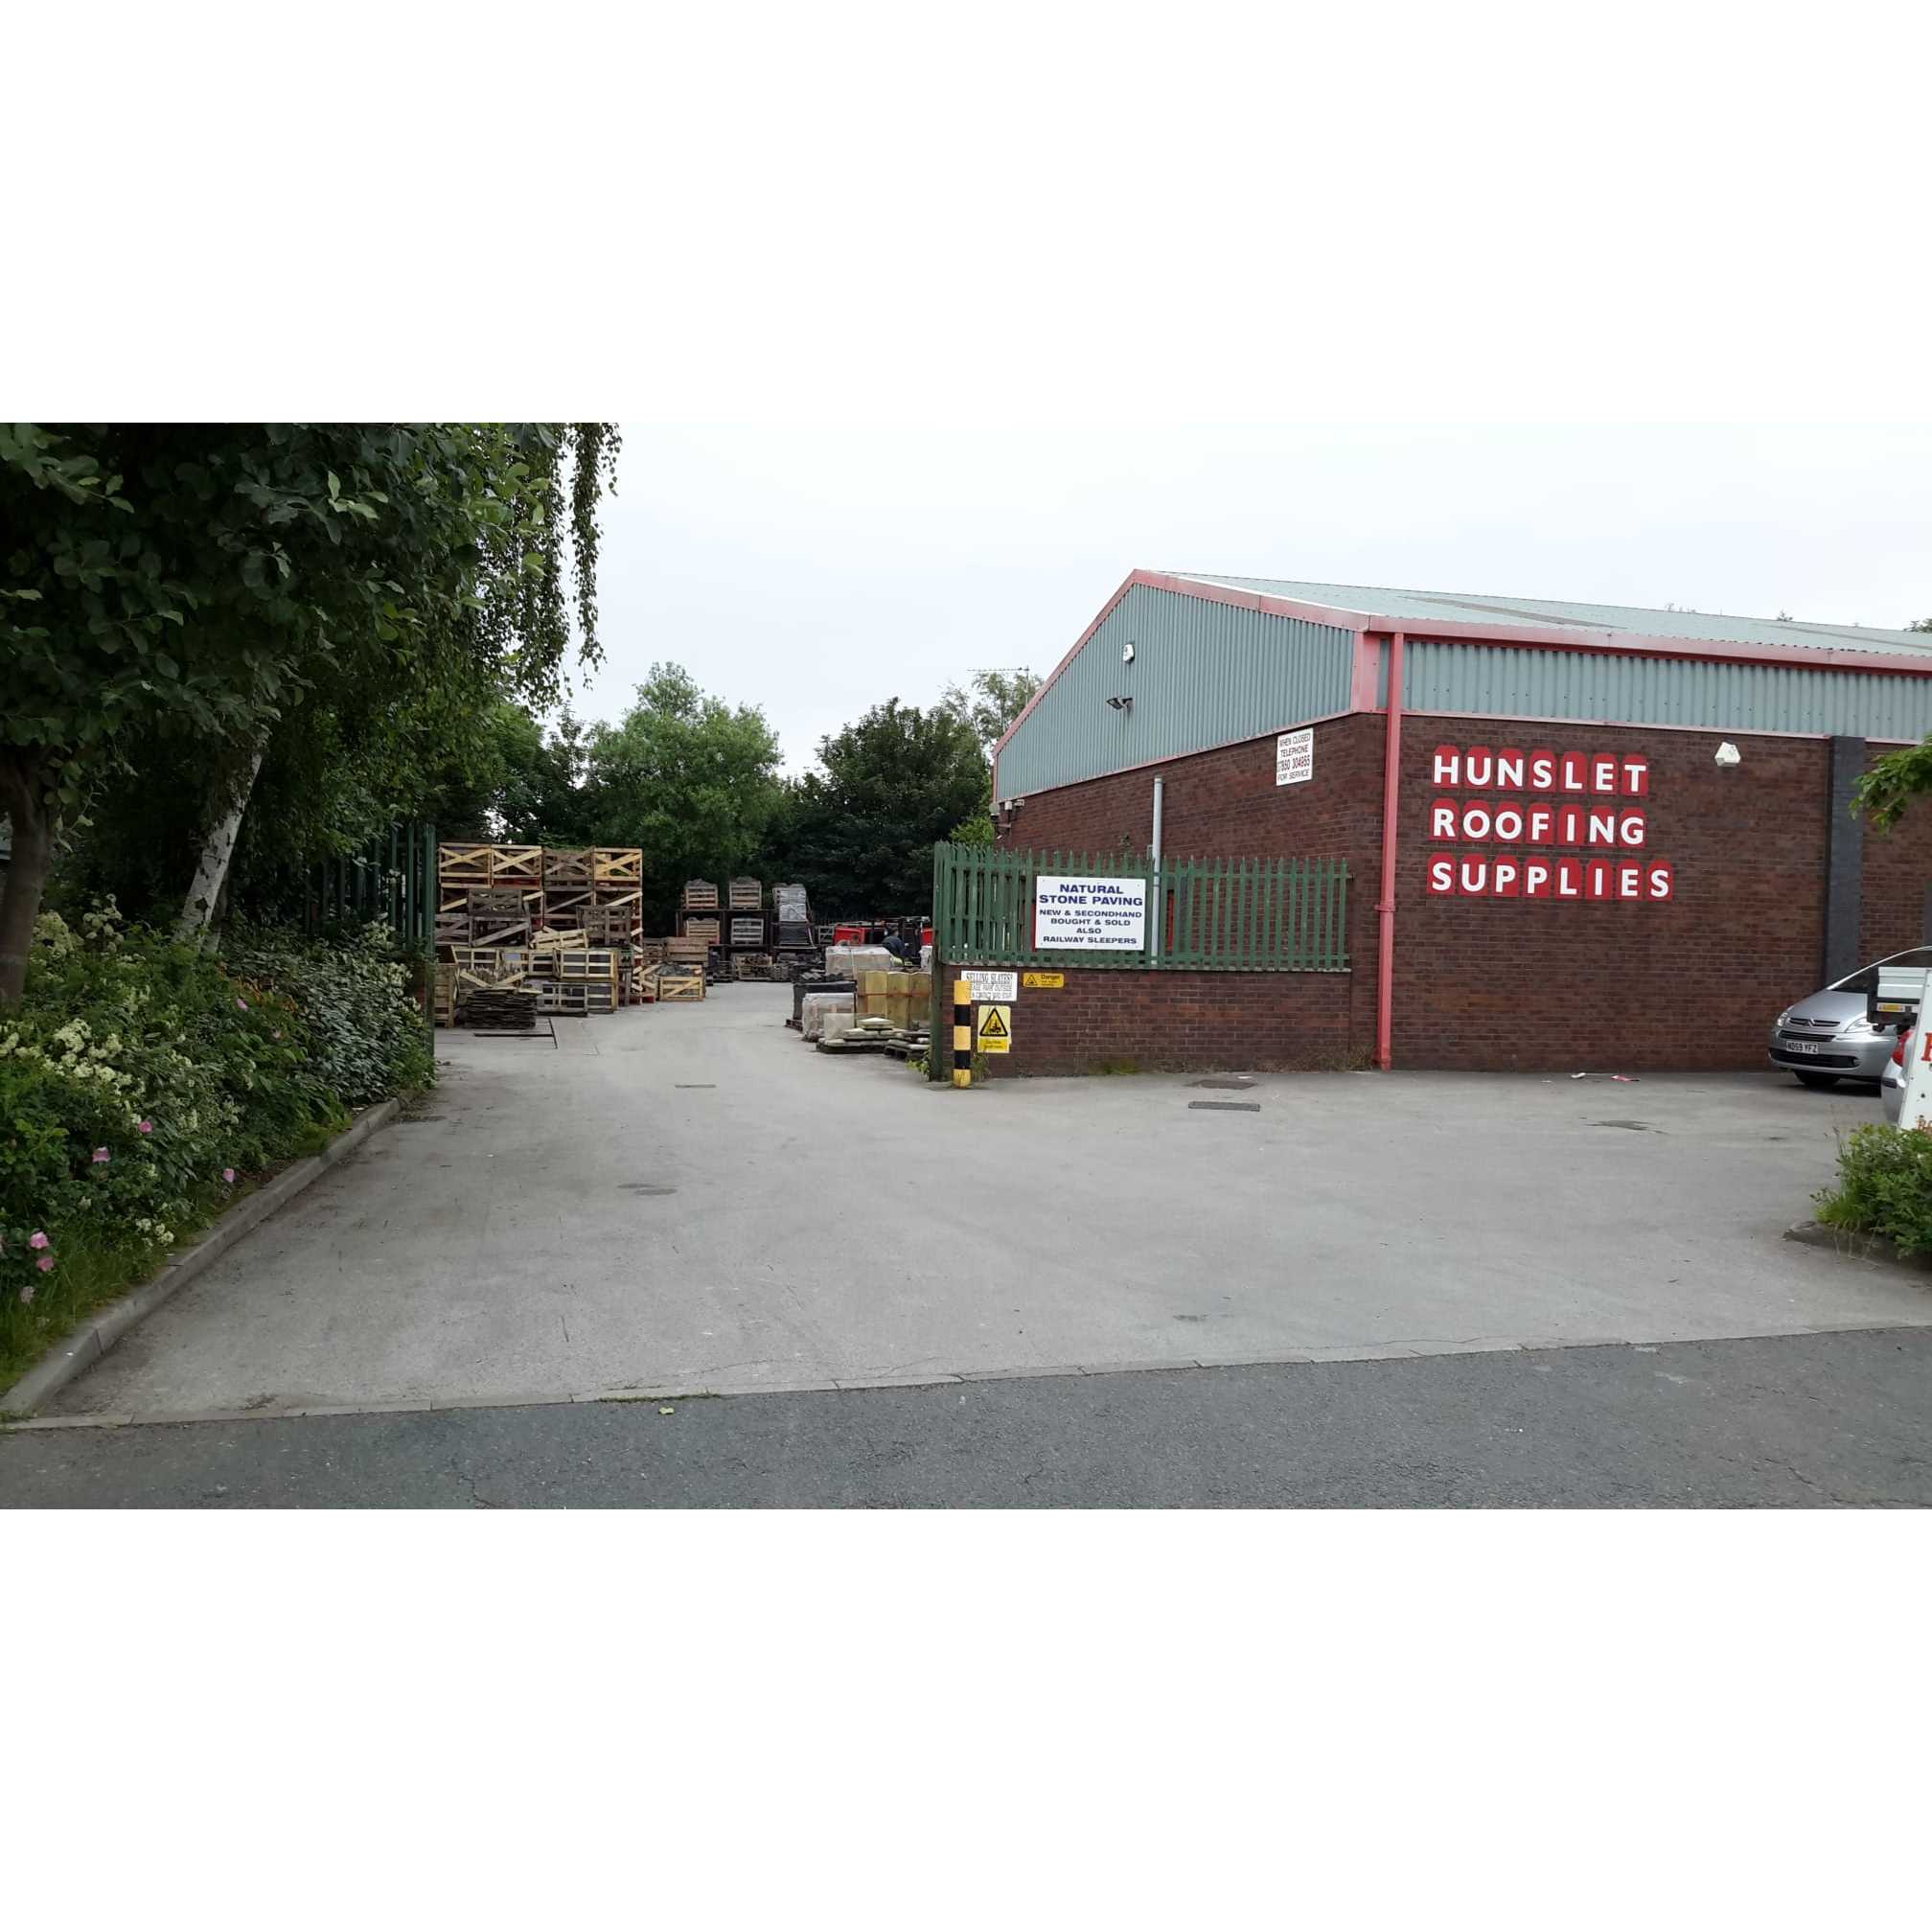 LOGO Hunslet Roofing Supplies Ltd Leeds 01132 719940